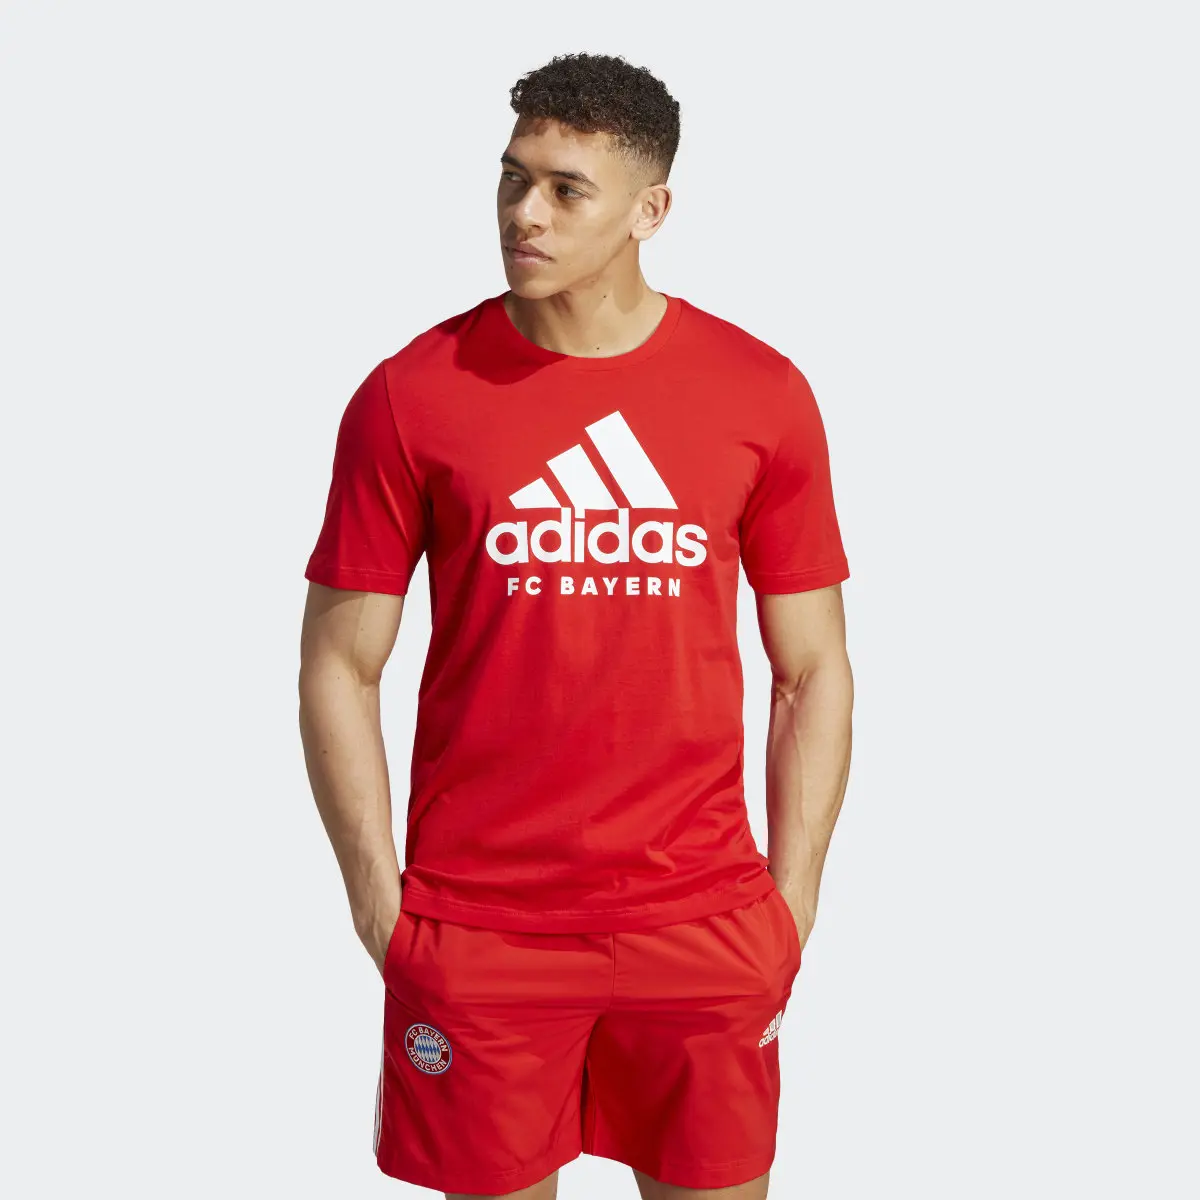 Adidas FC Bayern München DNA Graphic T-Shirt. 2